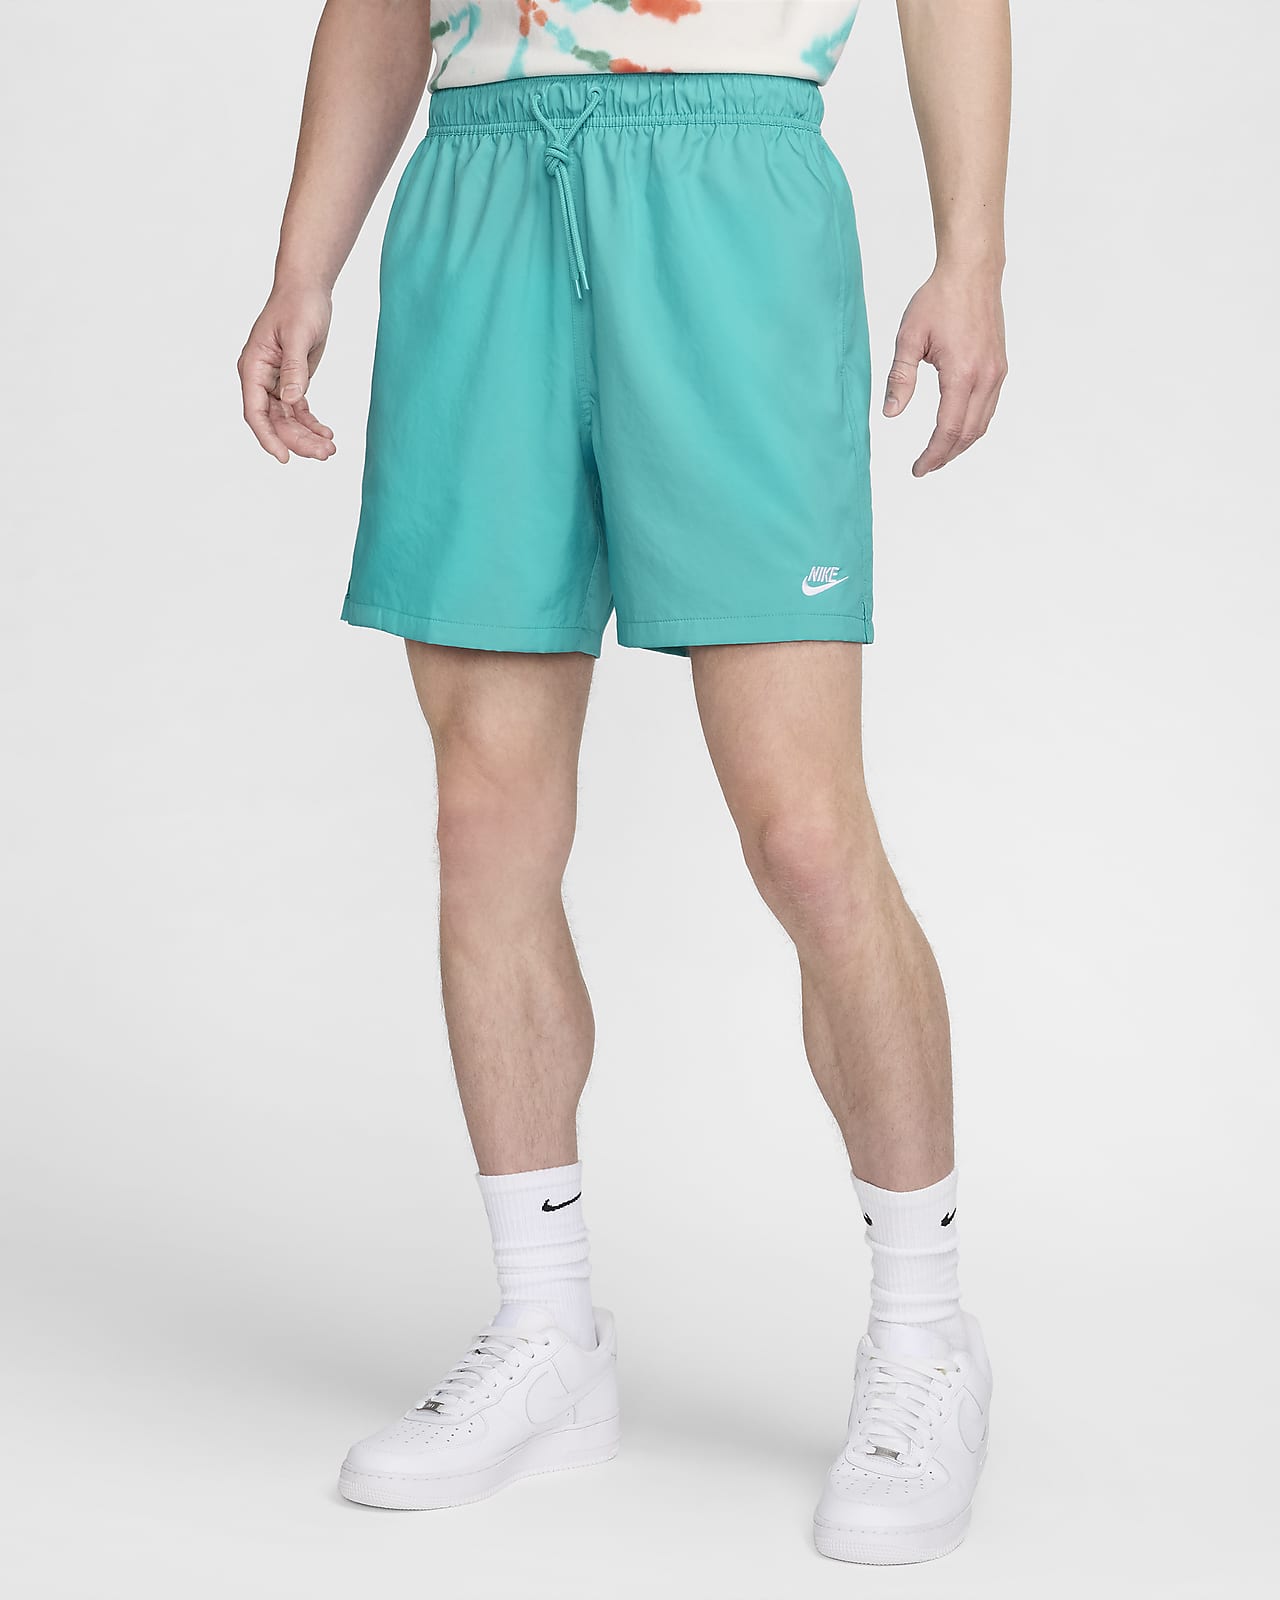 Shorts Flow in tessuto Nike Club – Uomo